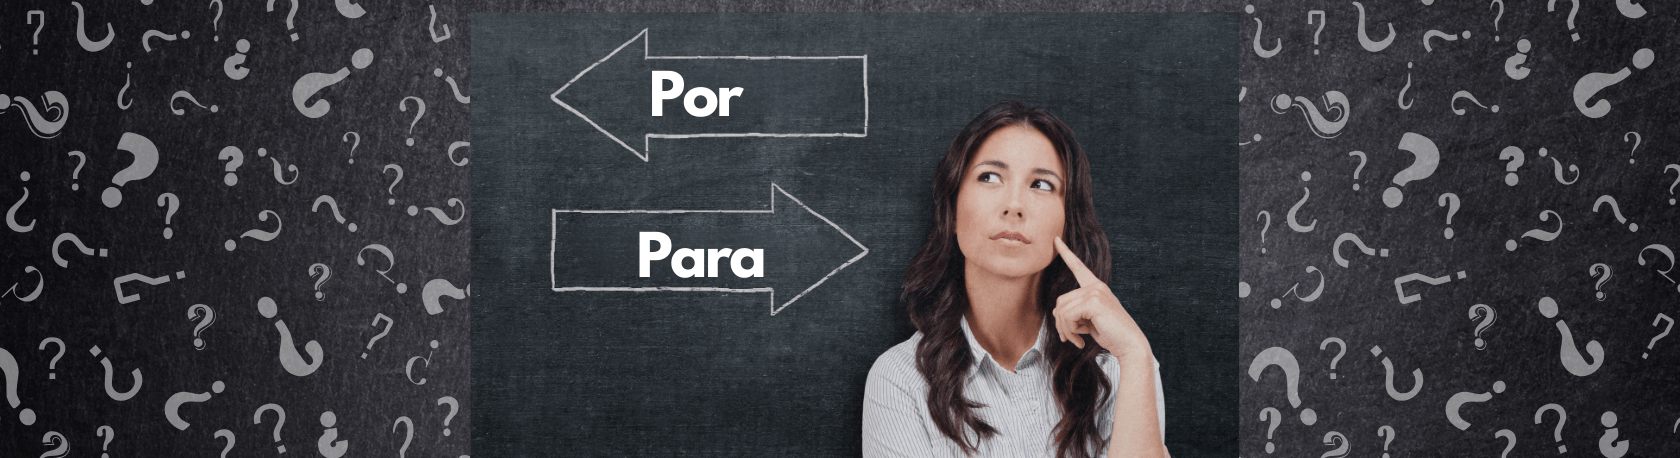 Master the uses of POR y PARA - Spanish Grammar - Learn Spanish - Study Spanish - Speak Spanish - Easy Español